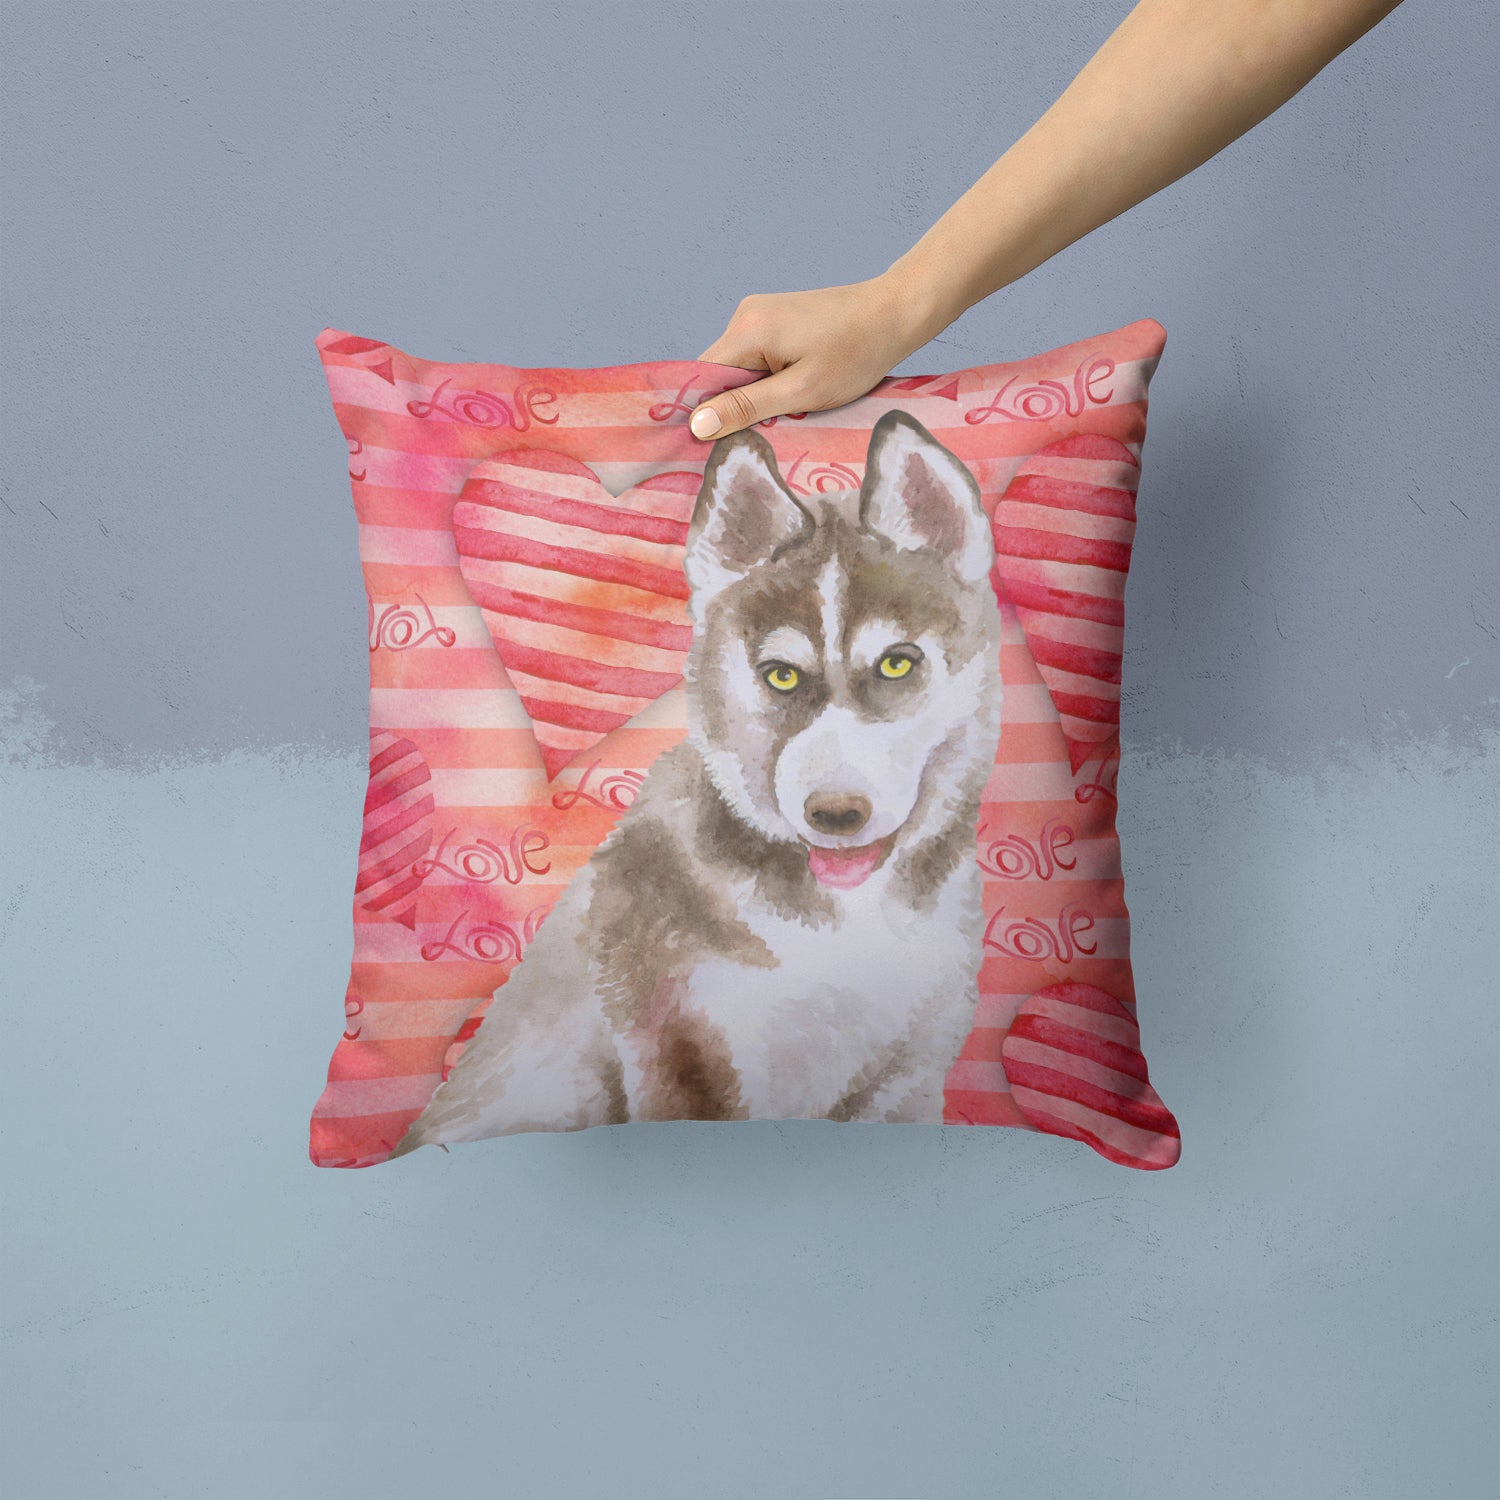 Siberian Husky Grey Love Fabric Decorative Pillow BB9783PW1414 - the-store.com